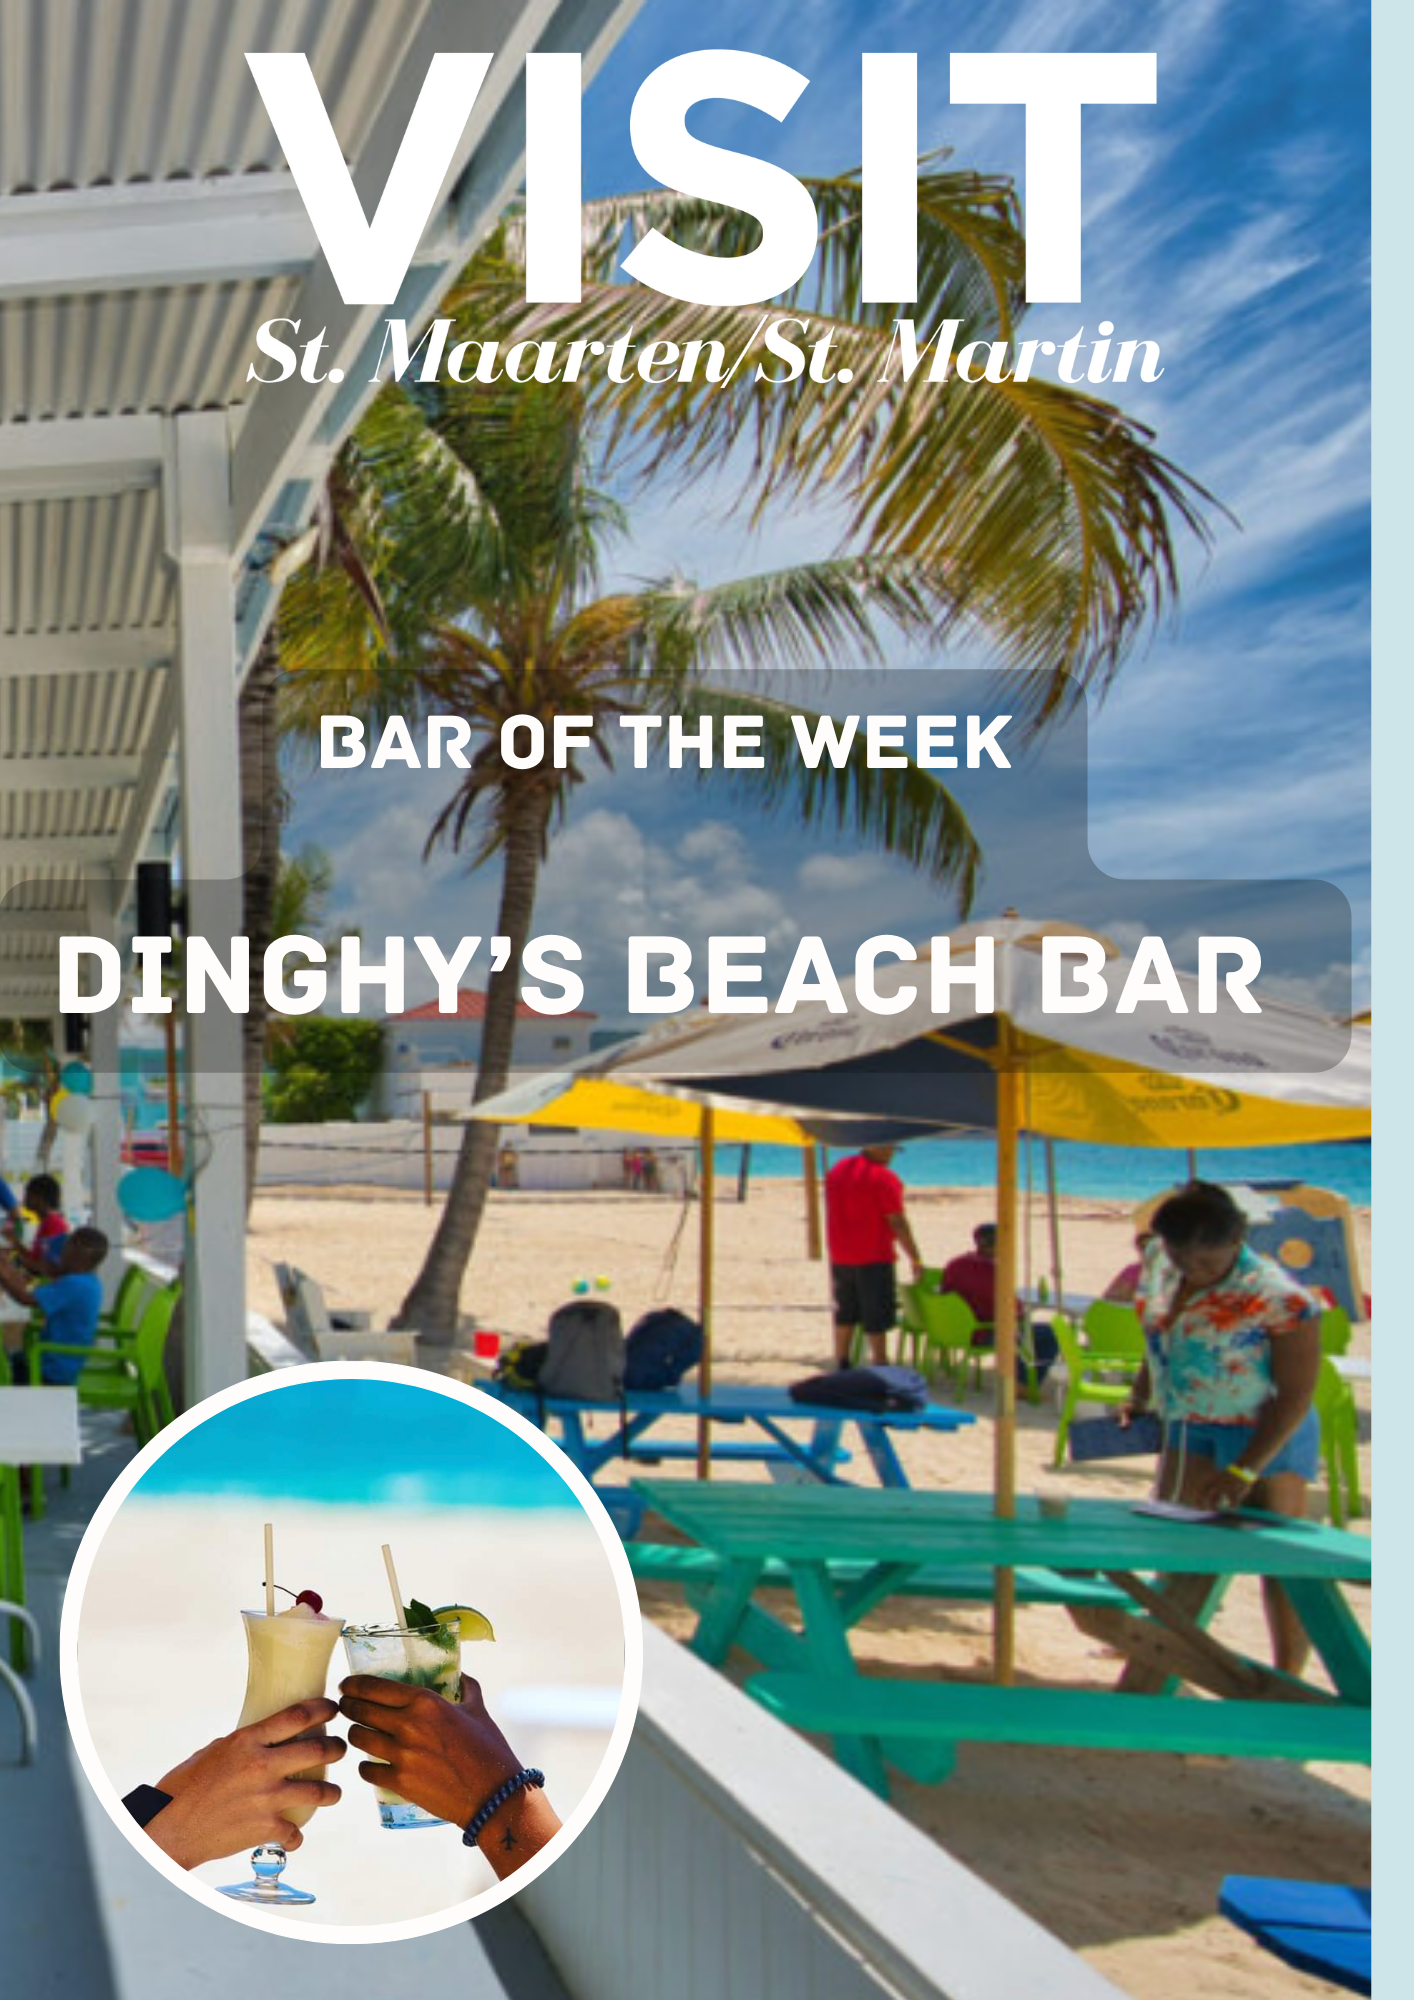 Dinghy's Beach Bar on the west side of Simpson Bay St Maarten